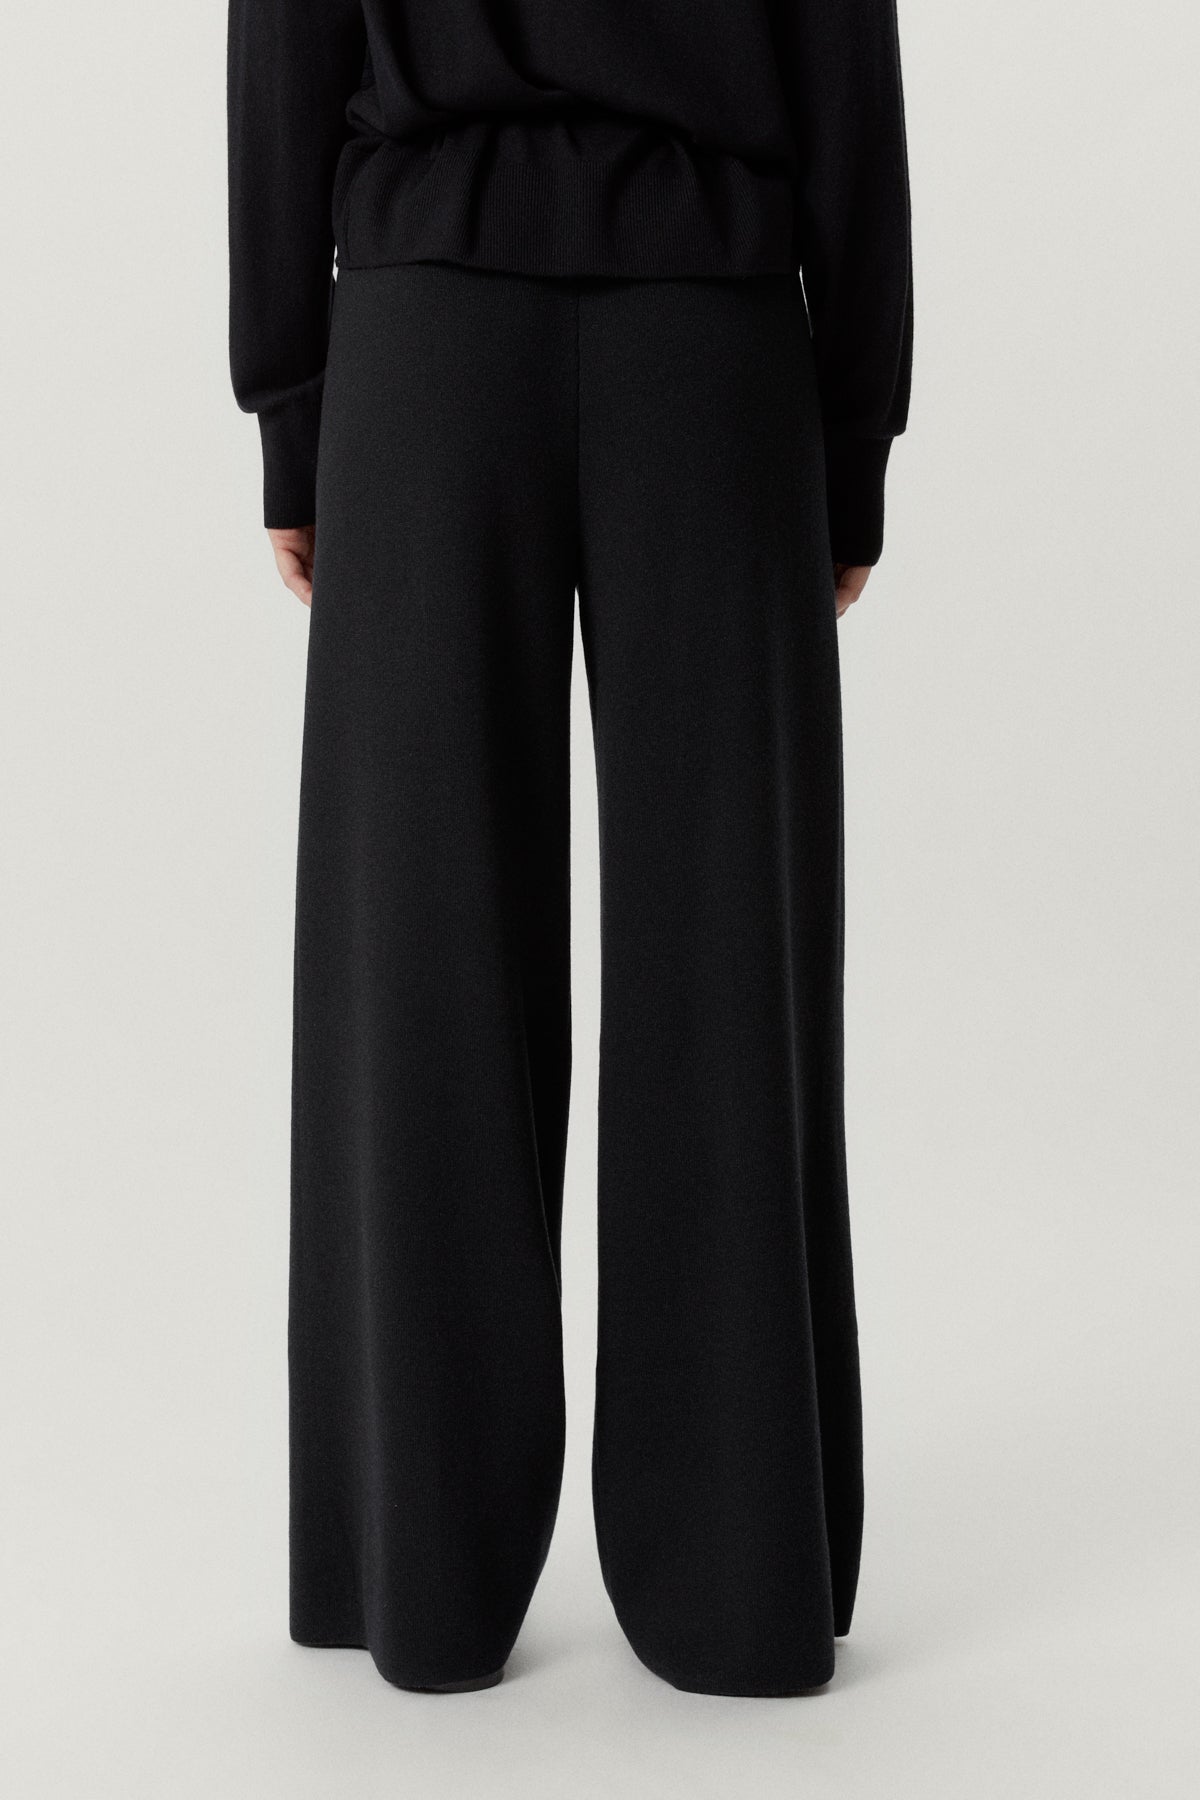 Black | The Ultrasoft Wool Palazzo pants